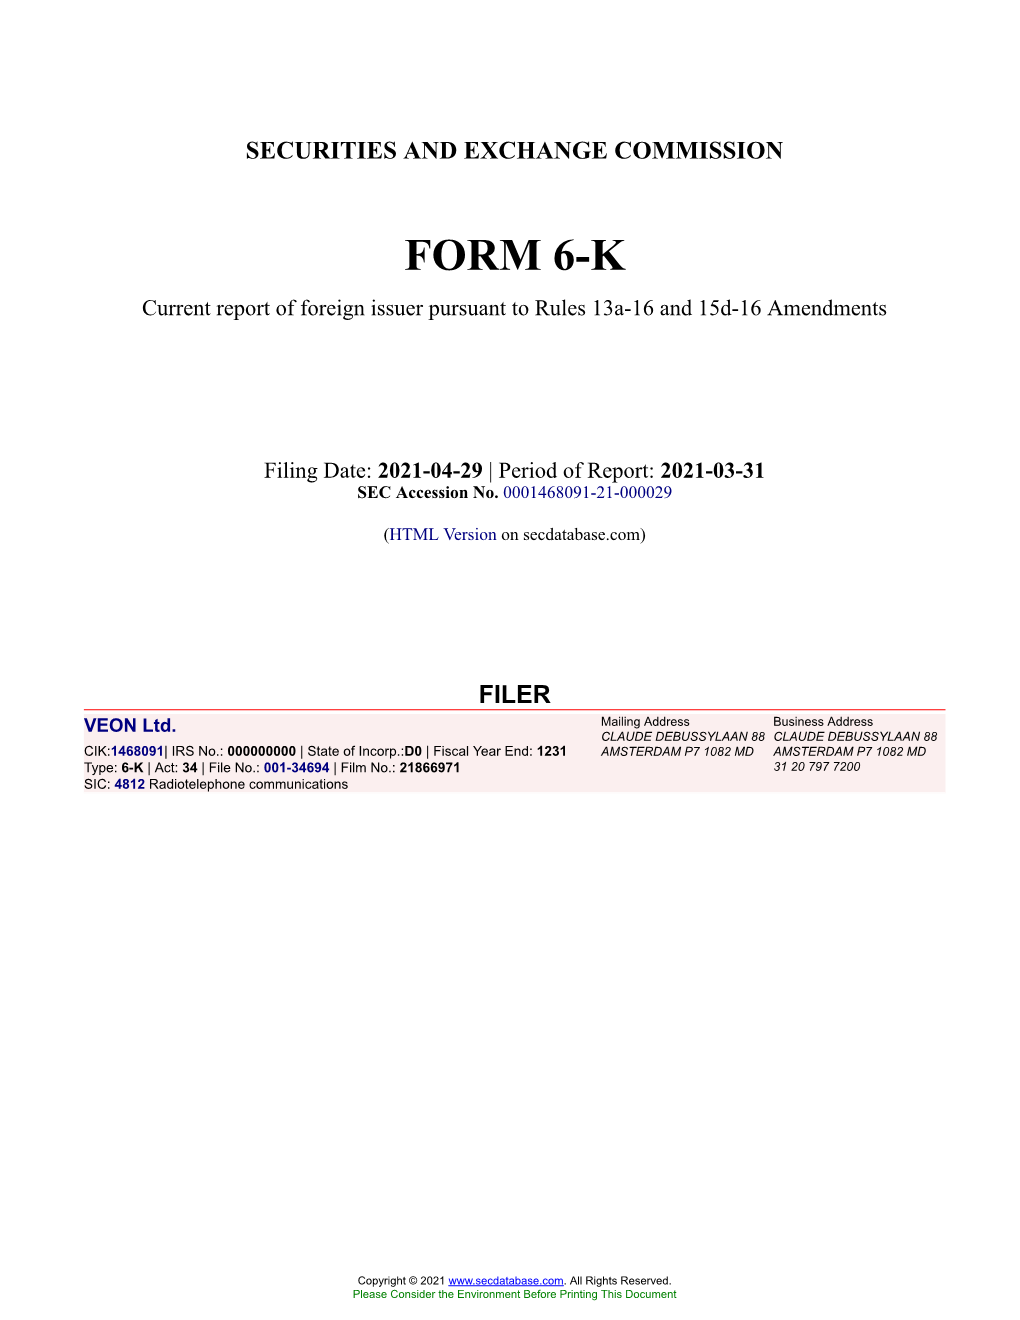 VEON Ltd. Form 6-K Current Event Report Filed 2021-04-29